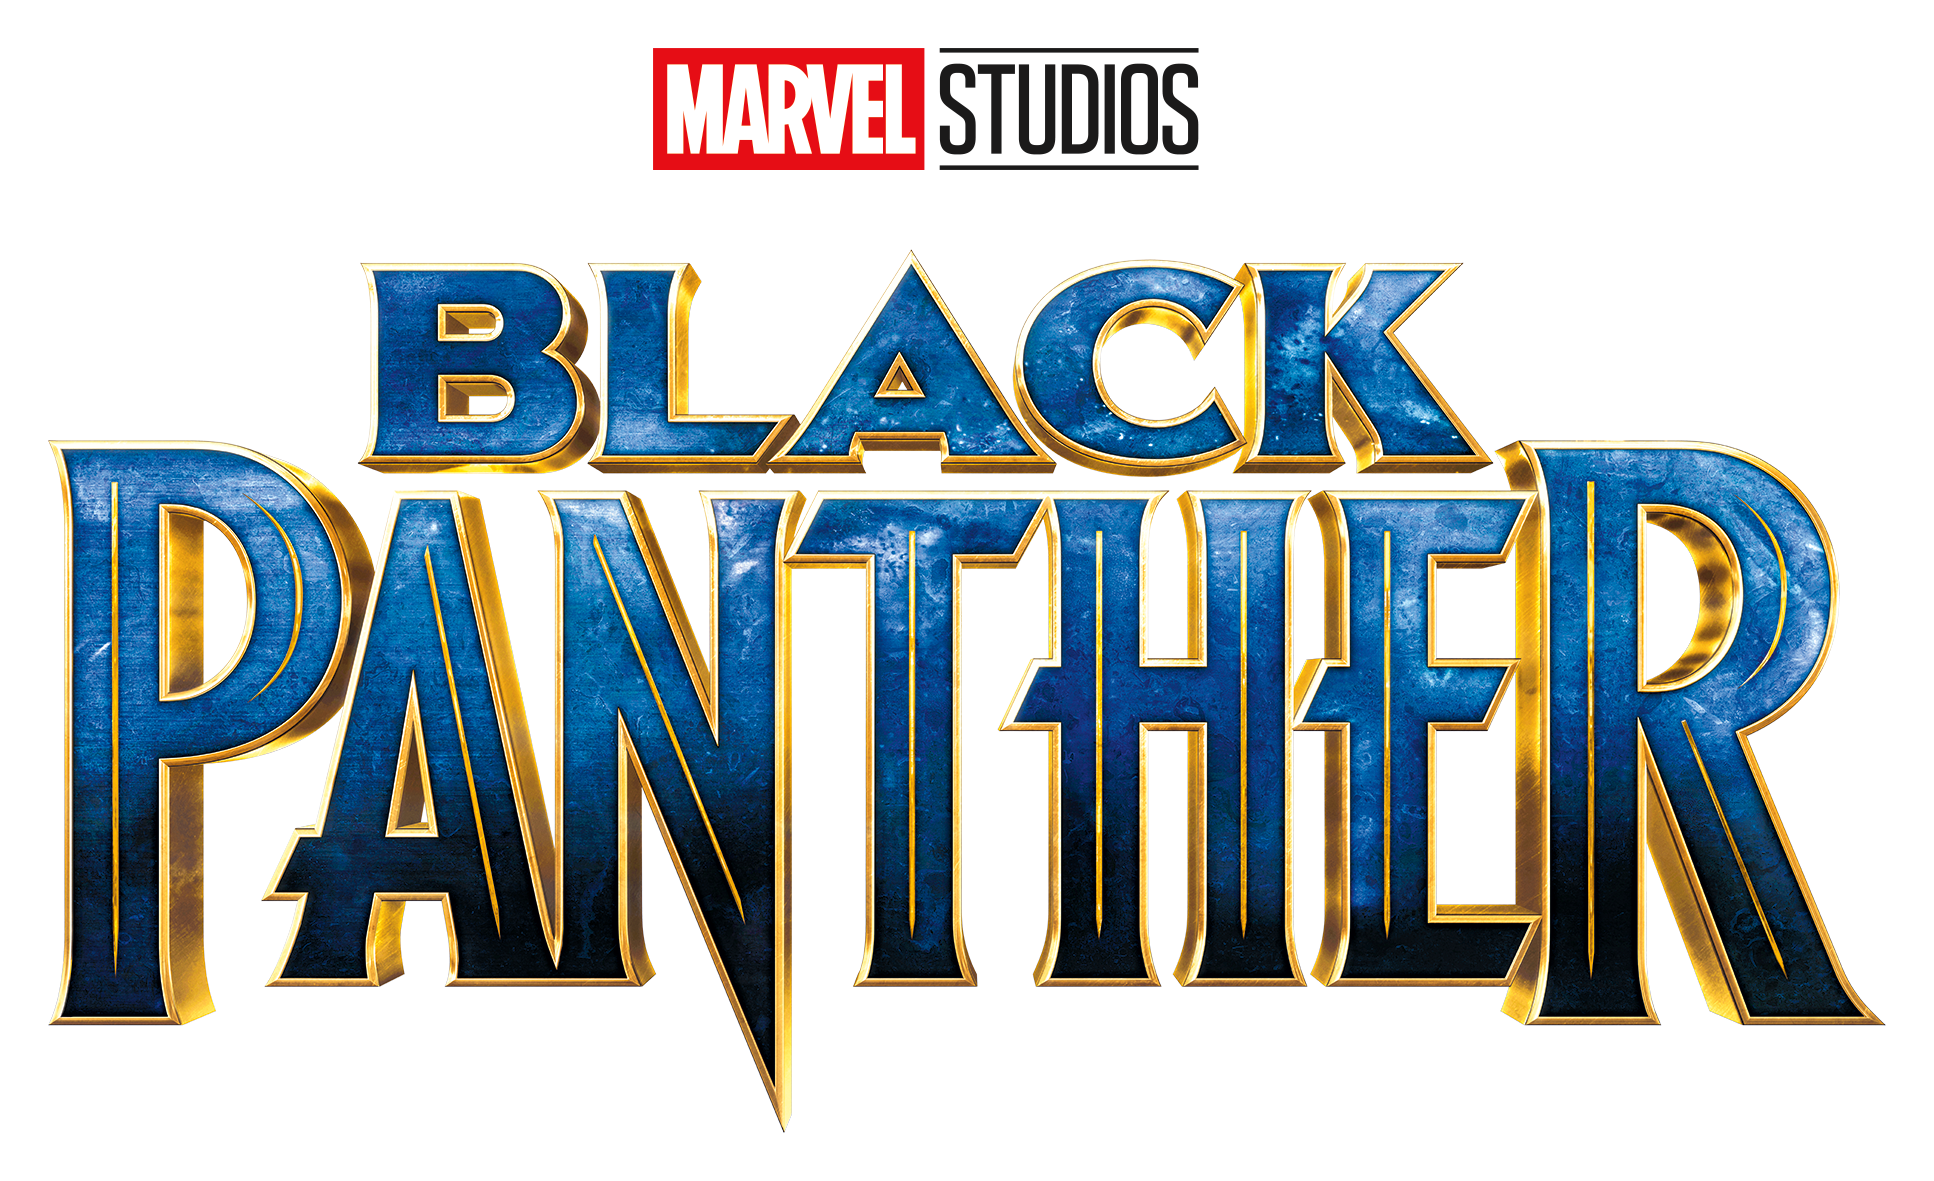 Marvel Black Panther логотип PNG изображения фон